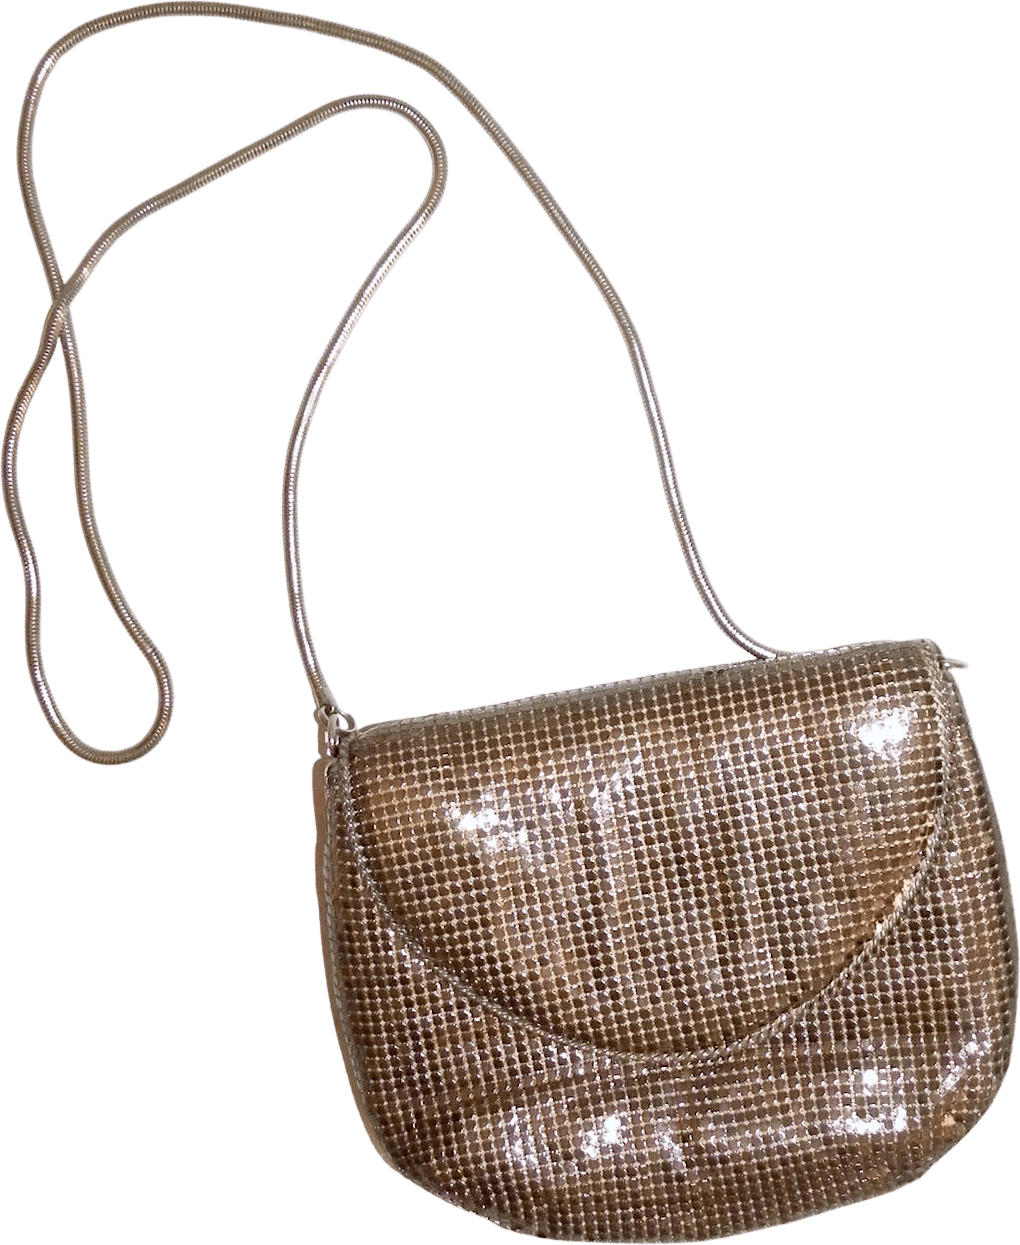 70's disco handbags